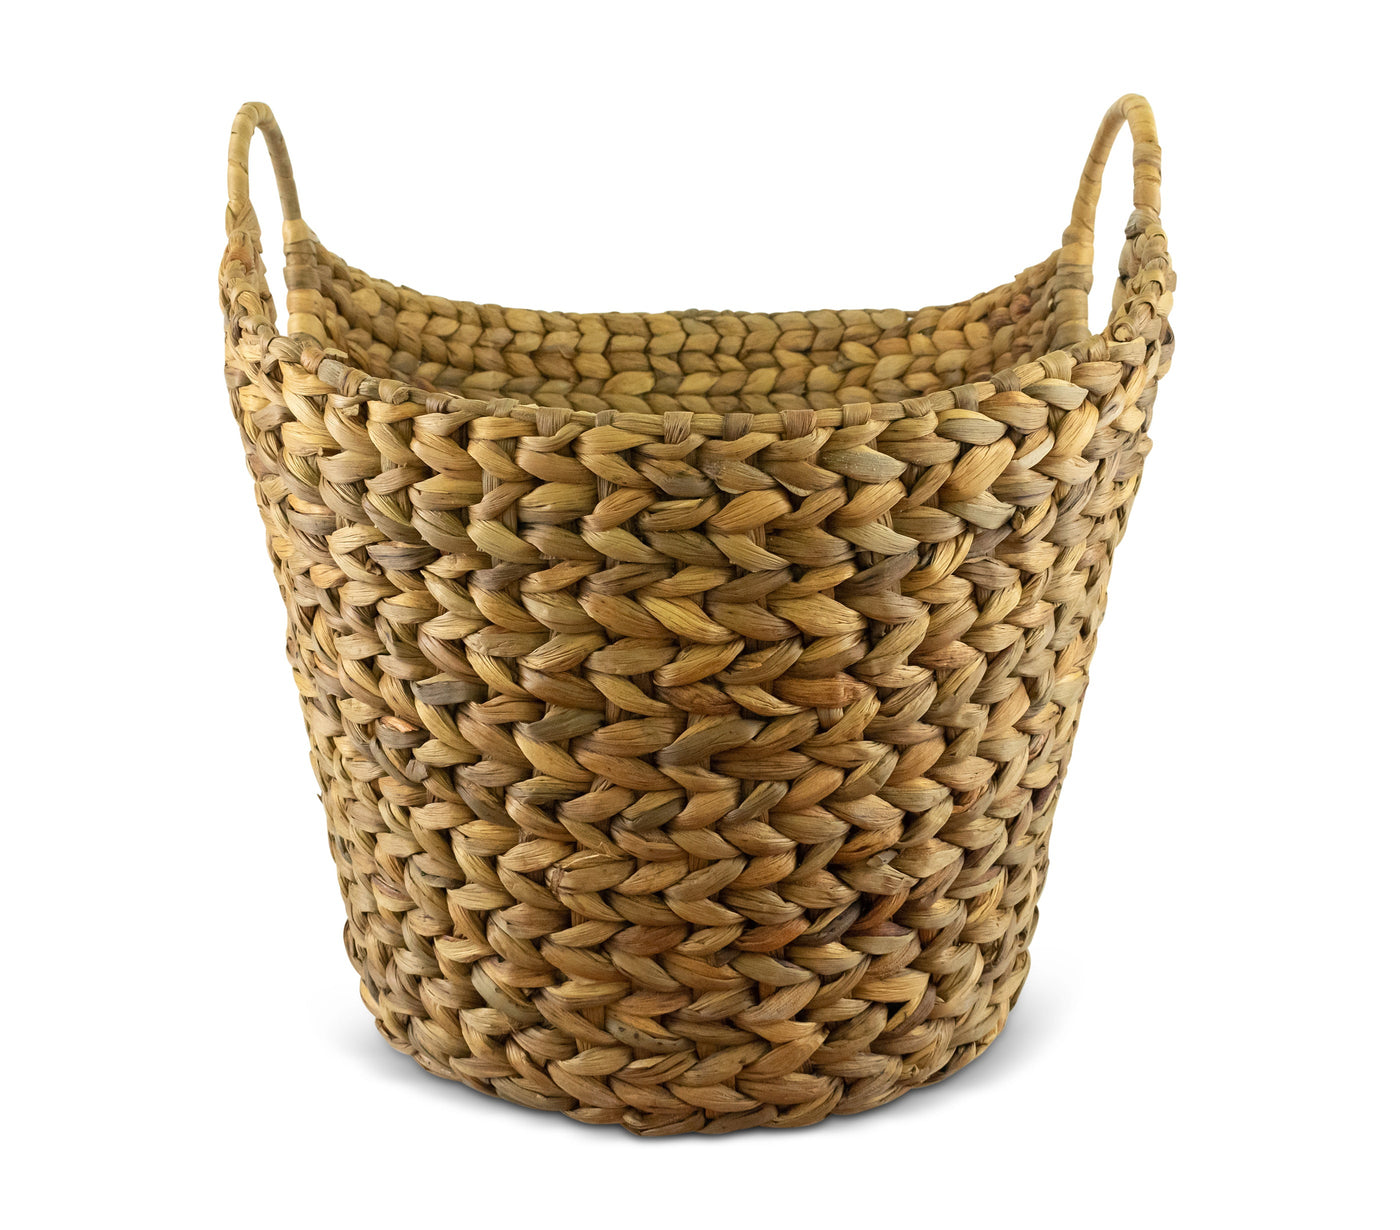 Extra Large Hand Woven Water Hyacinth Storage Basket Shelf Organizer Rectangular Wicker Baskets with Handles 19 x 15 x 14 inches